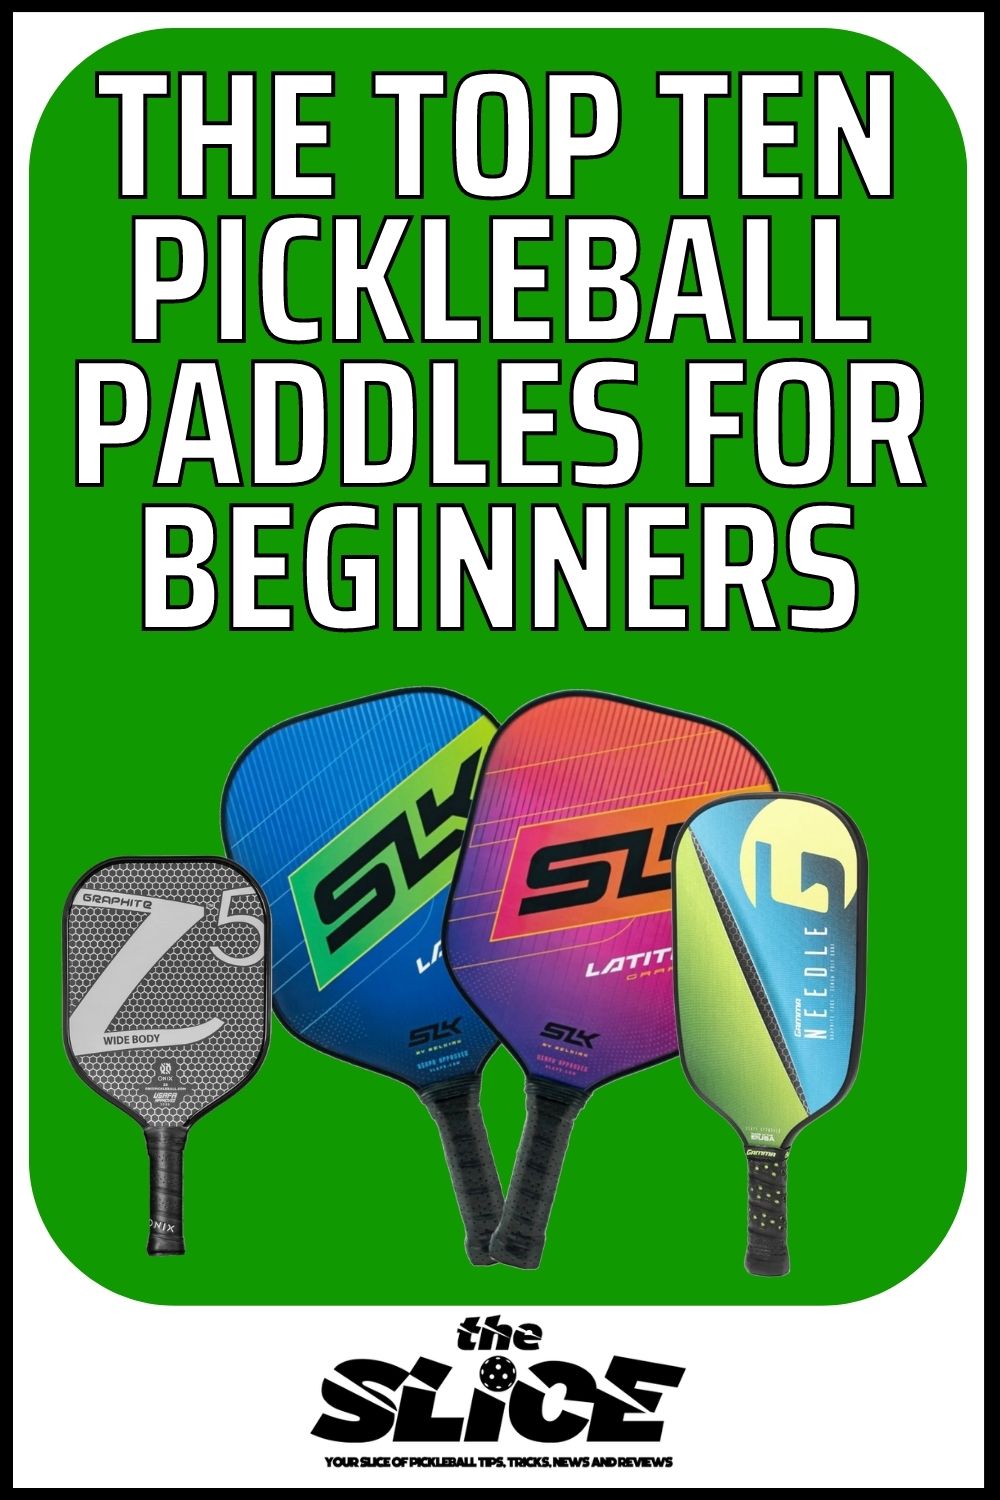 The Top Ten Pickleball Paddles for Beginners (1)